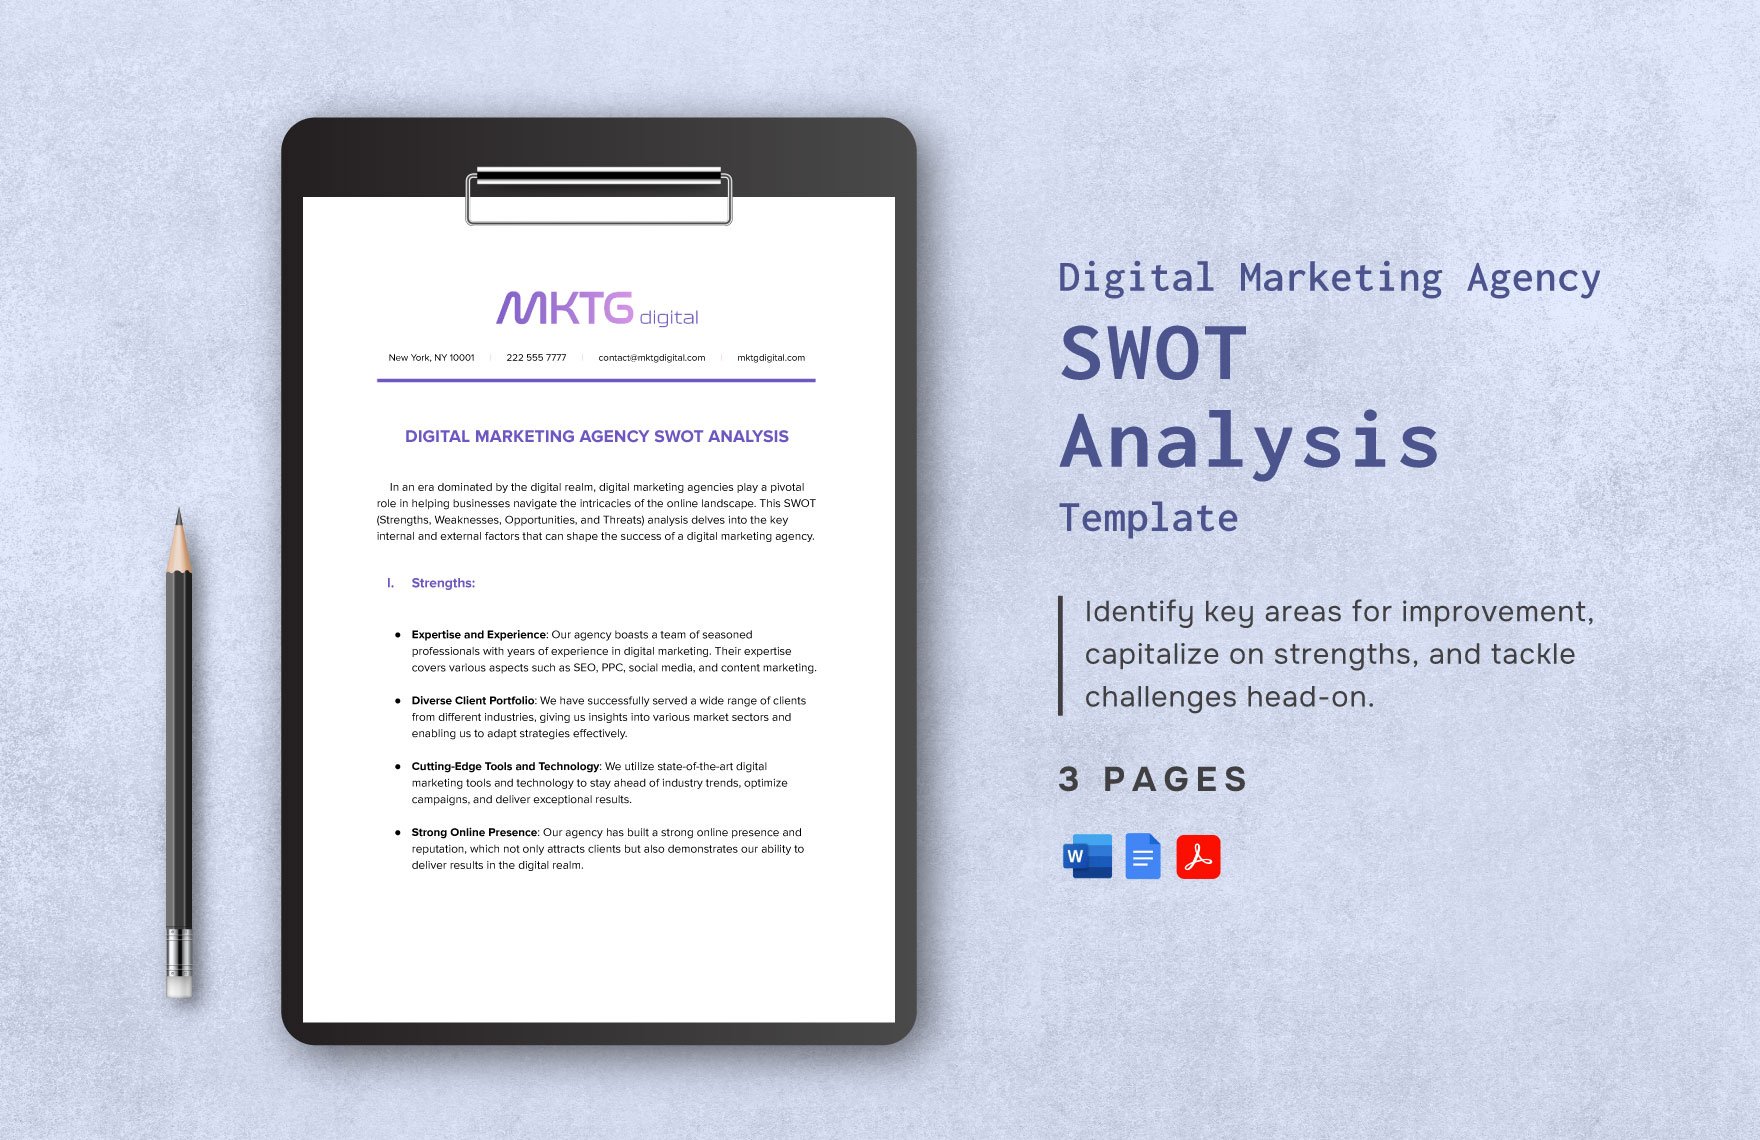 Digital Marketing Agency SWOT Analysis Template